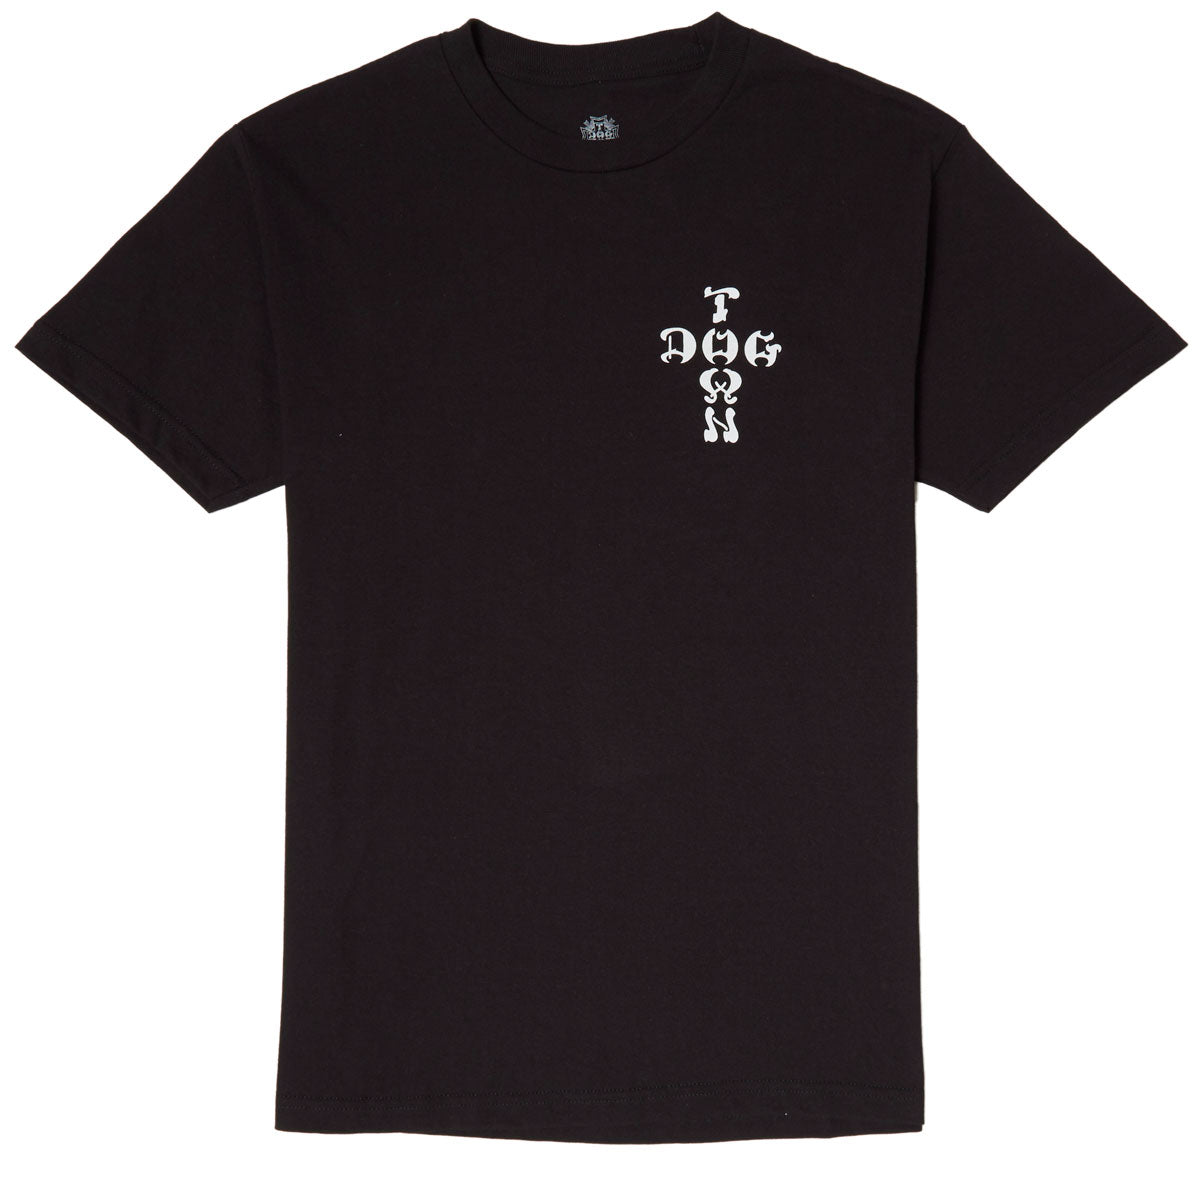 Dogtown Cross Logo Venice T-Shirt - Black/White image 1